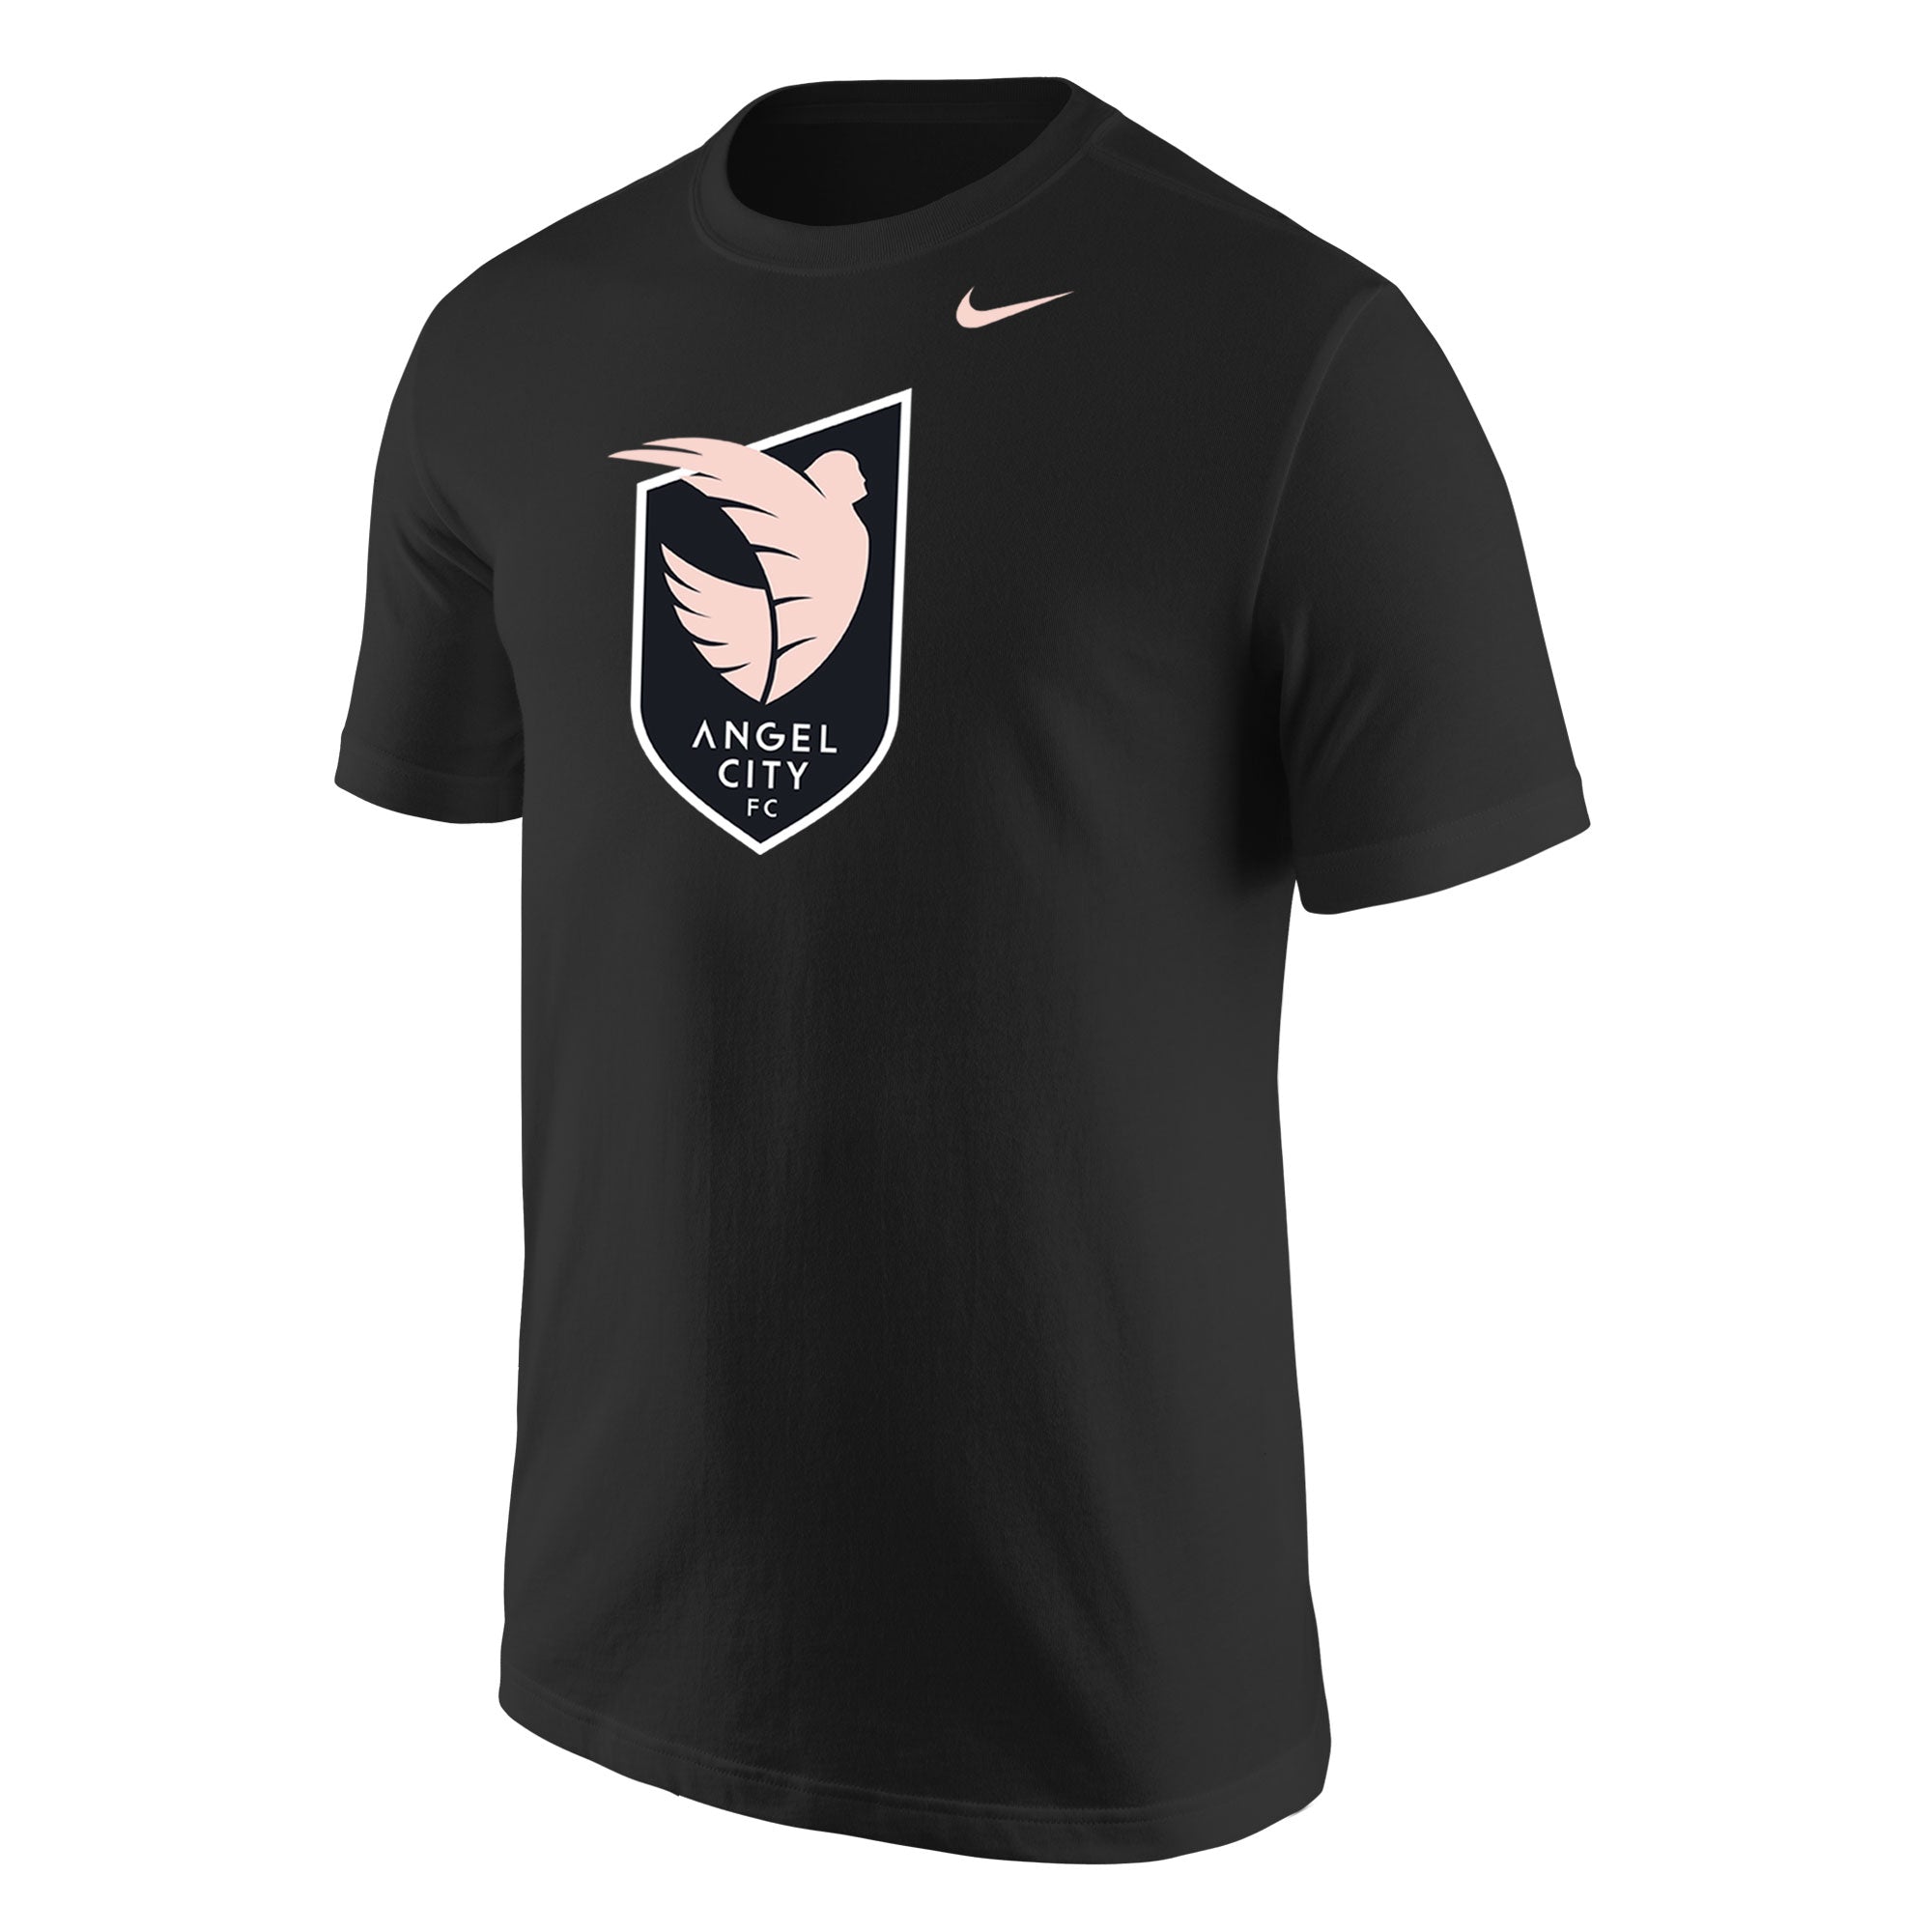 Angel City FC Nike Unisex Sol Rosa Crest camiseta de manga corta negra